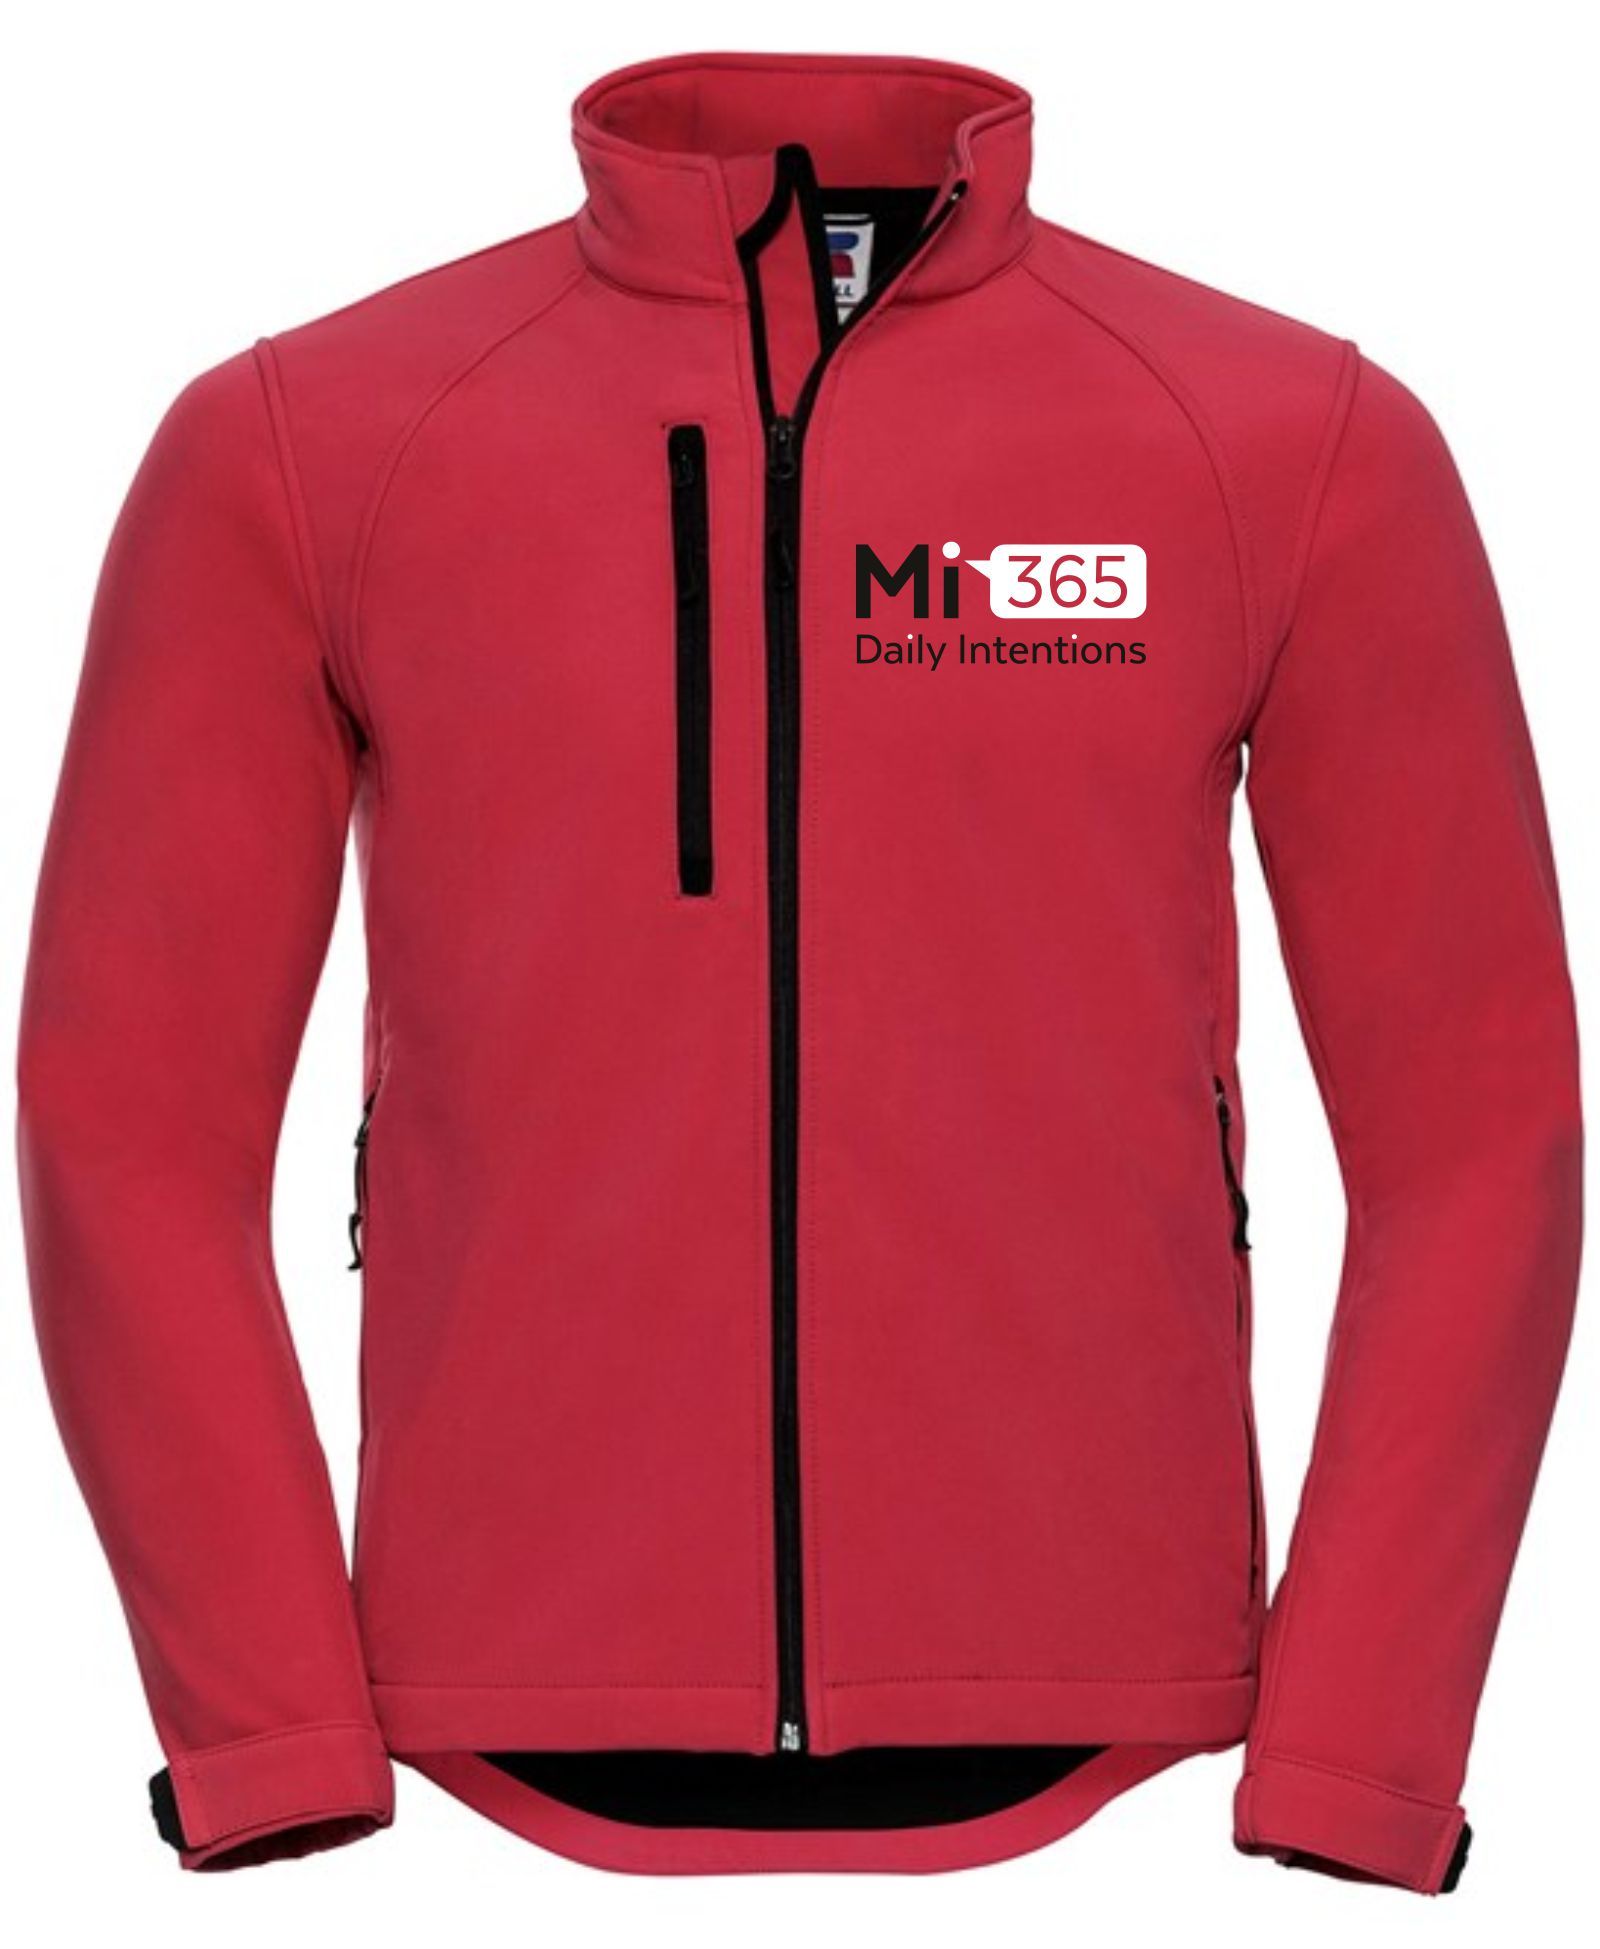 Mi365 Daily Intentions - Softshell jacket